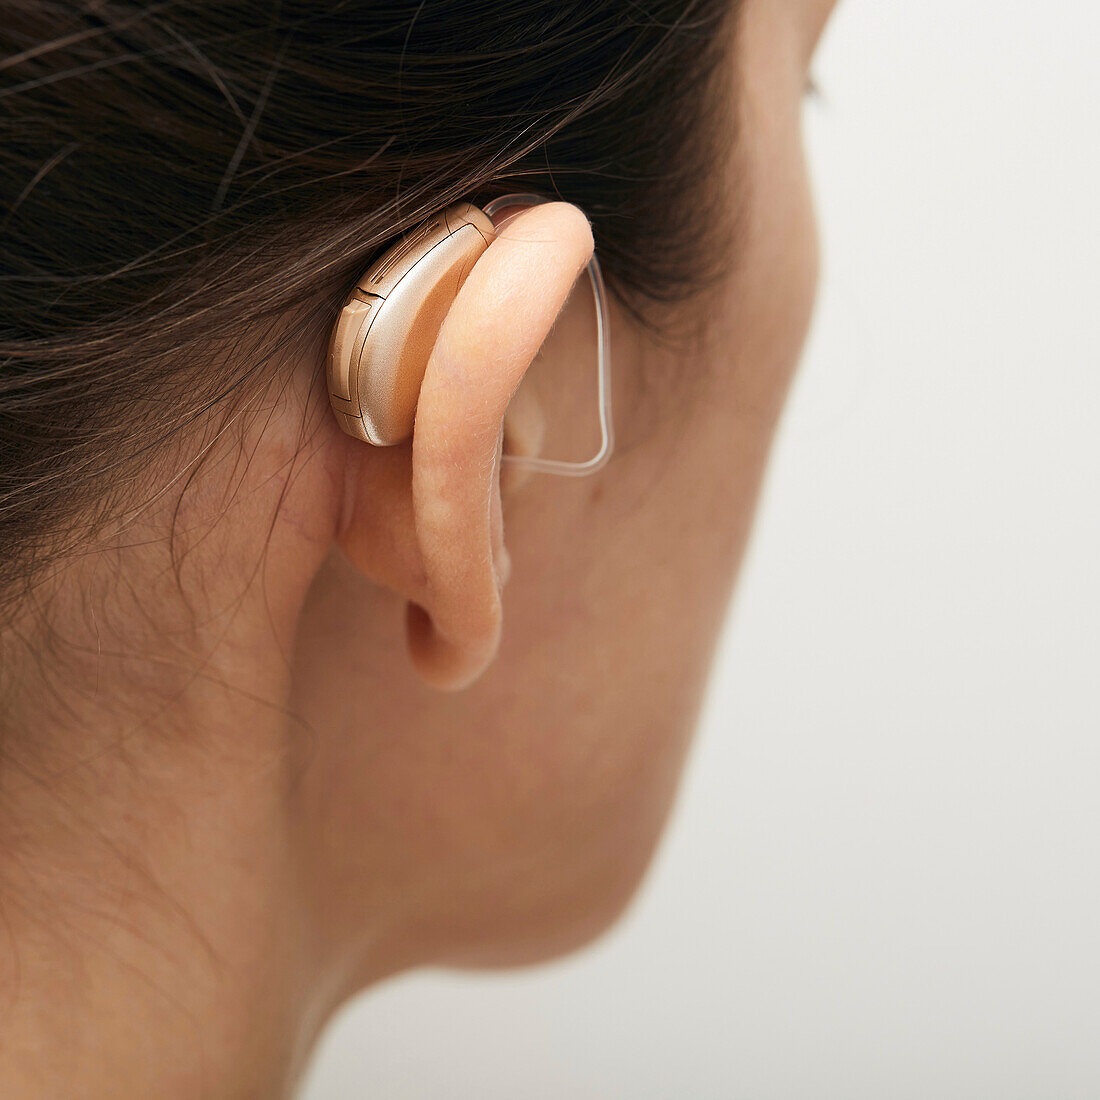 Woman wearing hearing aid